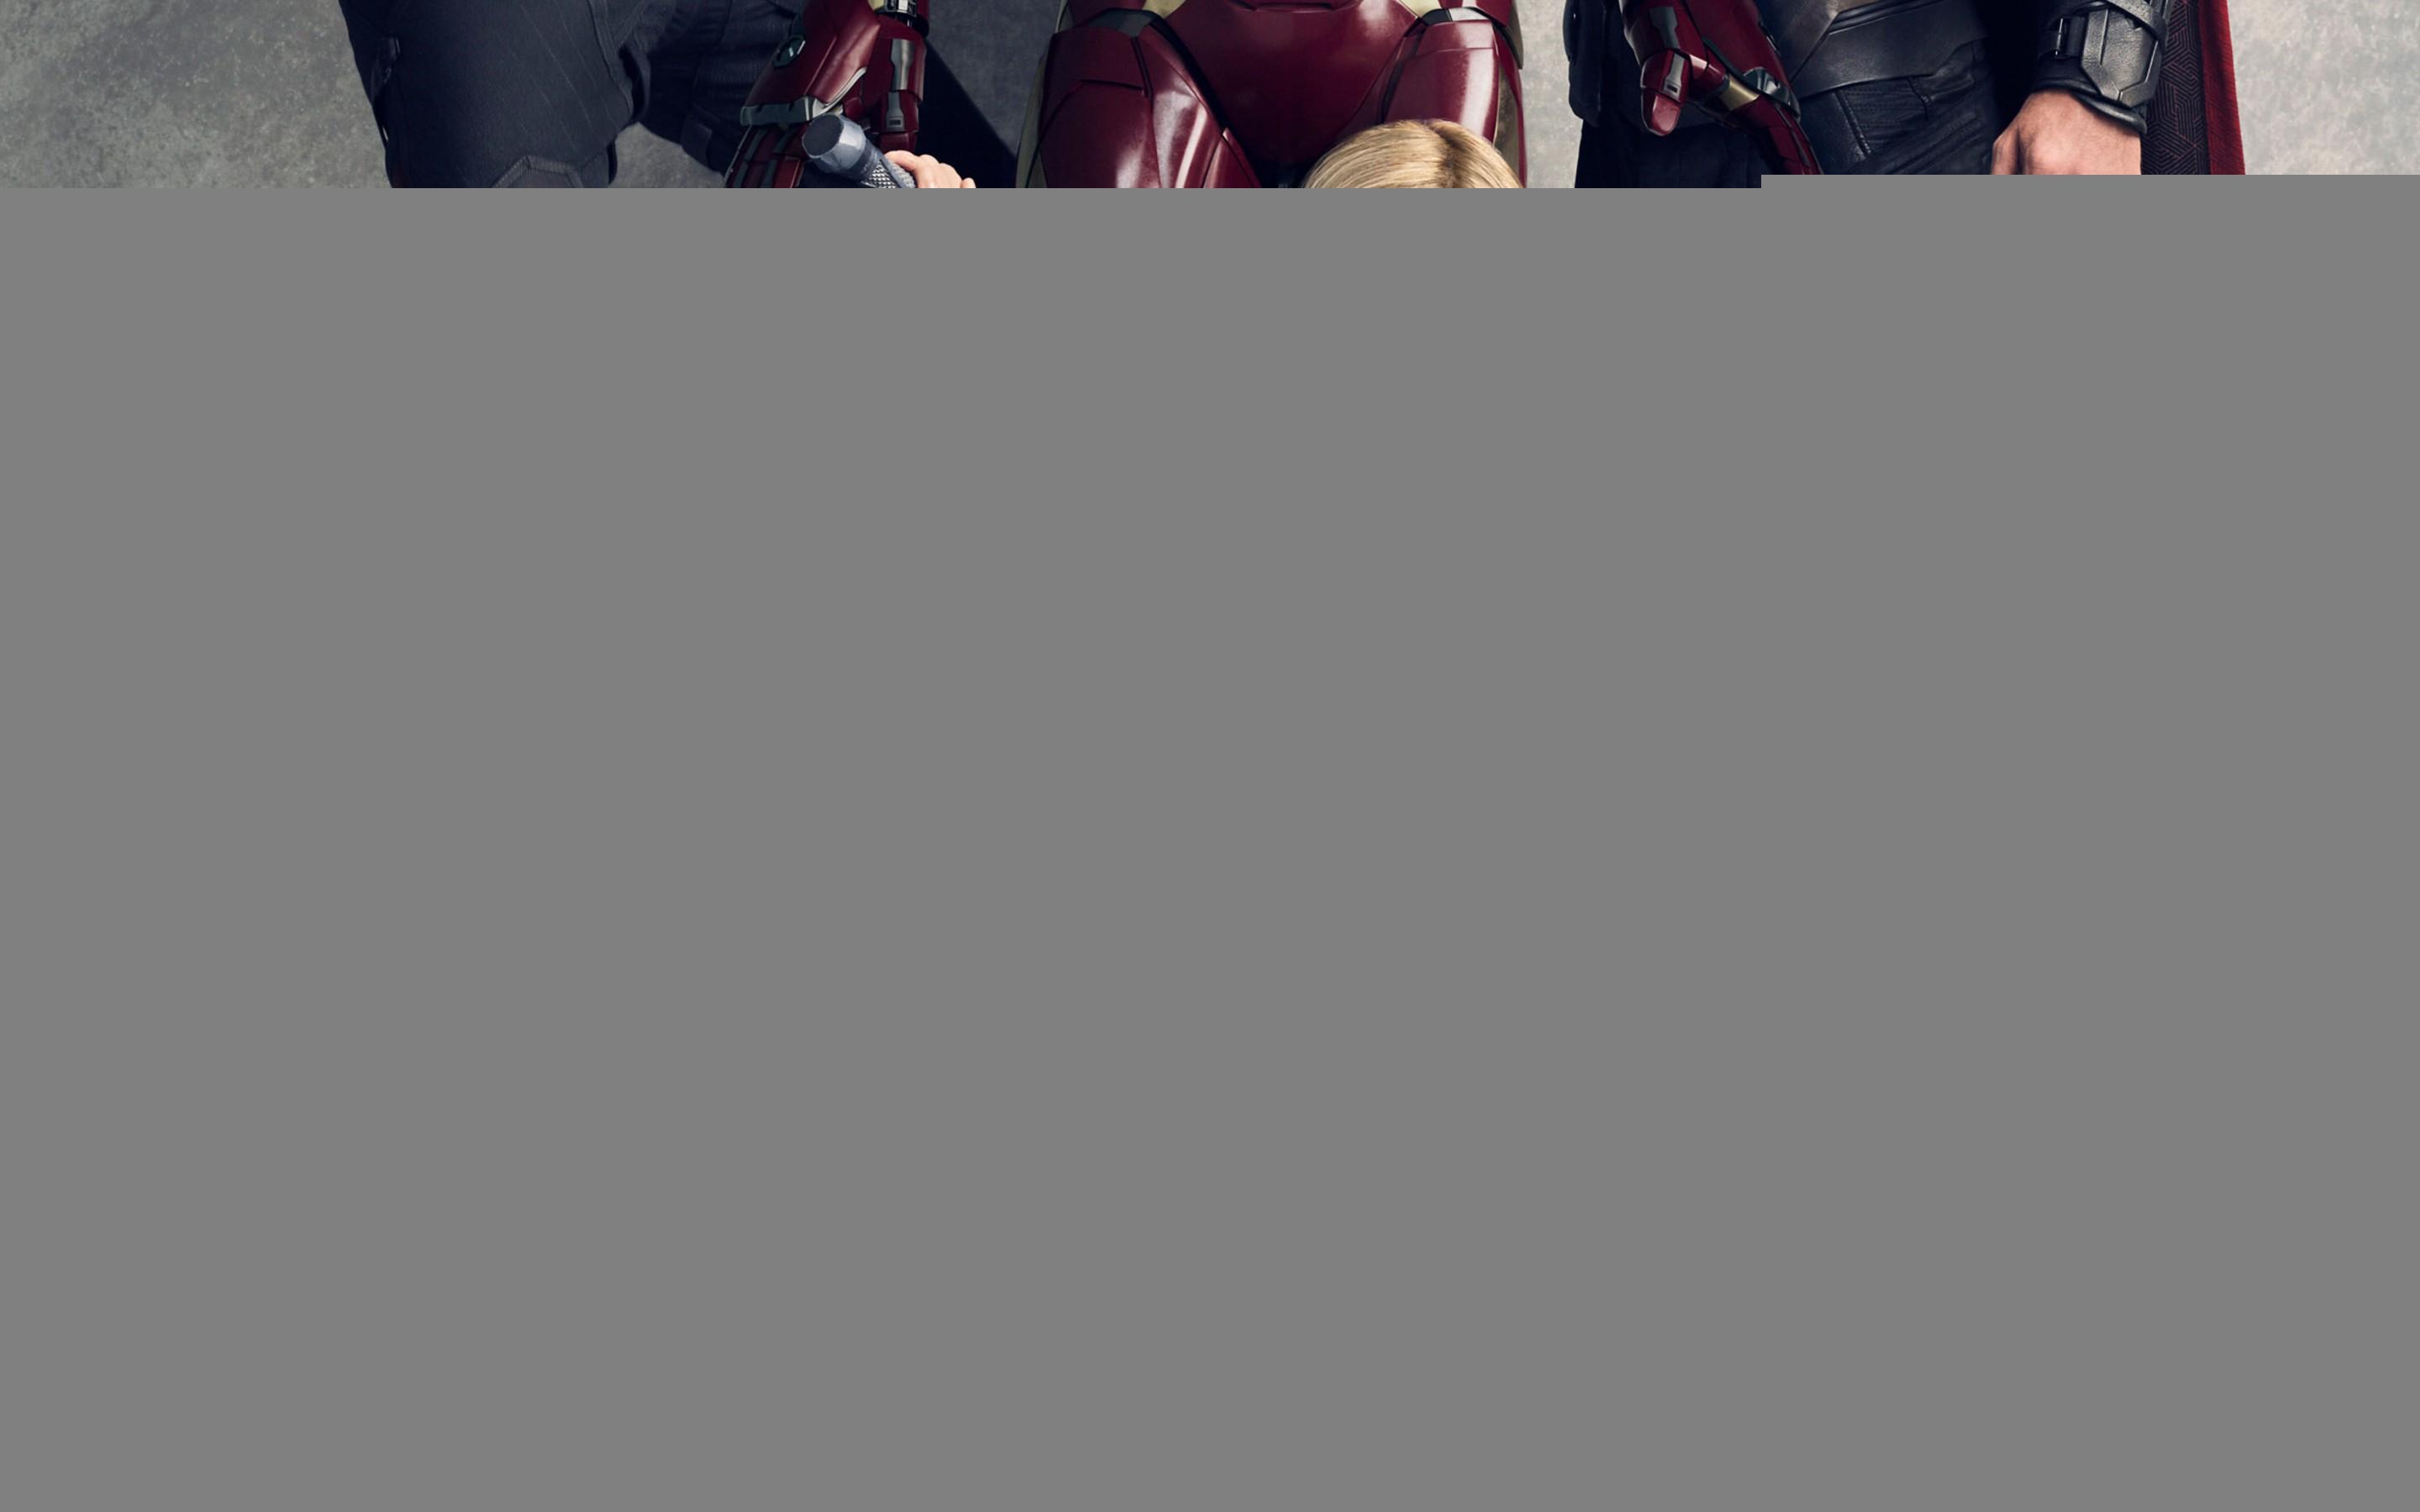 Wallpaper Avengers: Infinity War, Scarlett Johansson, Natasha